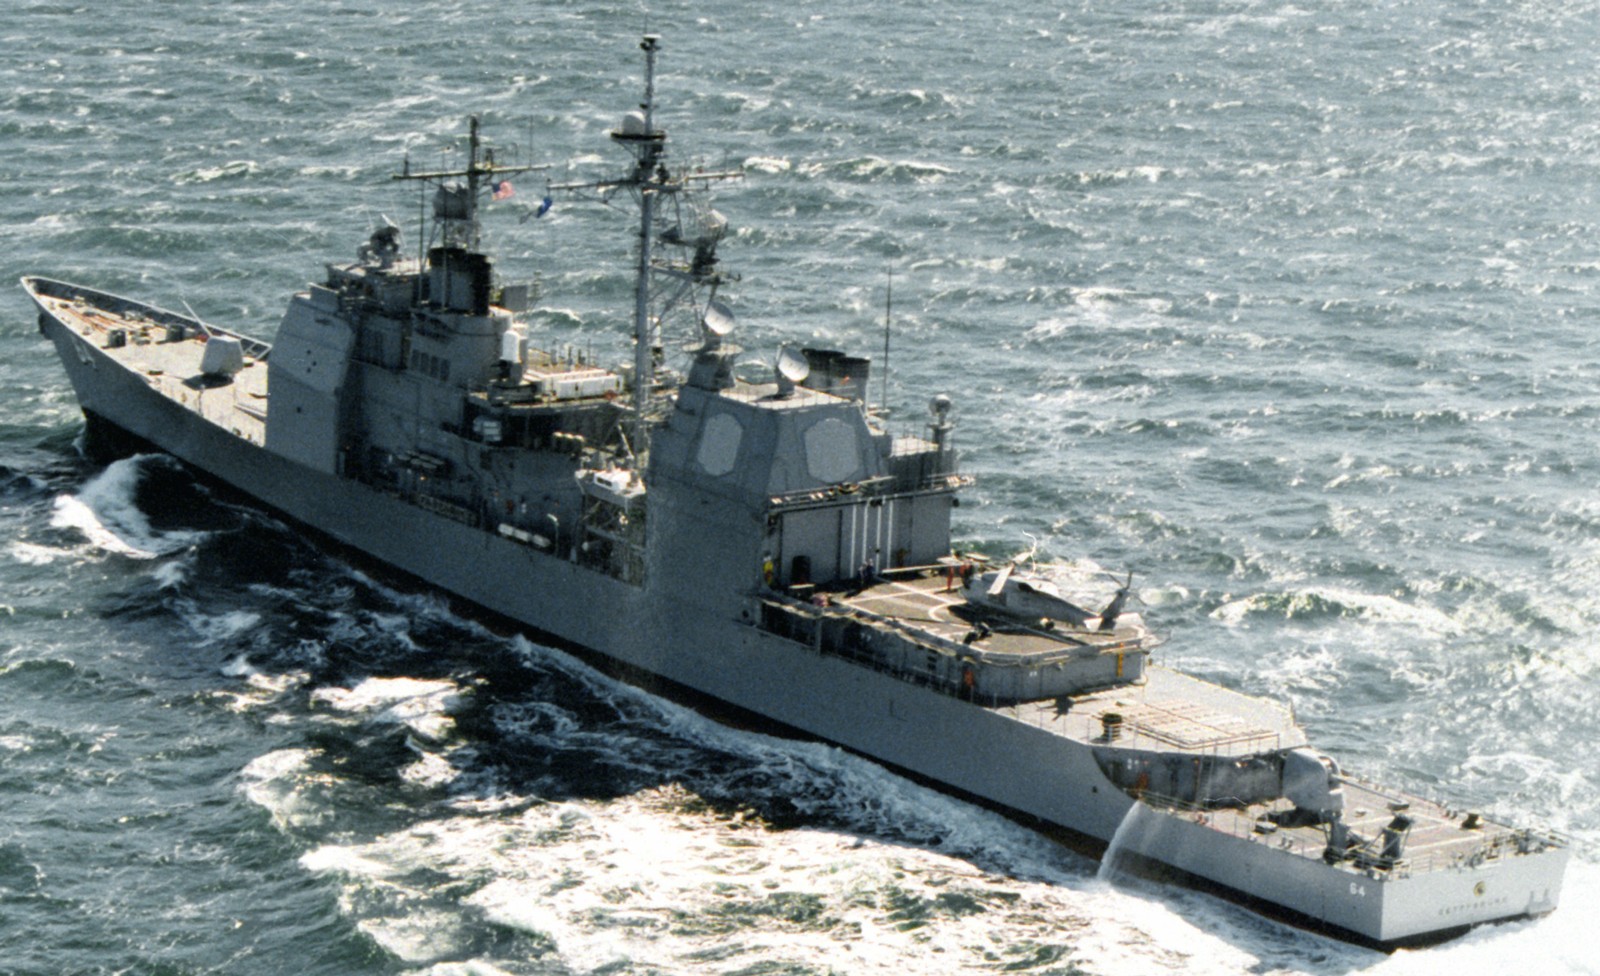 cg-64 uss gettysburg ticonderoga class guided missile cruiser aegis us navy sea trials 71